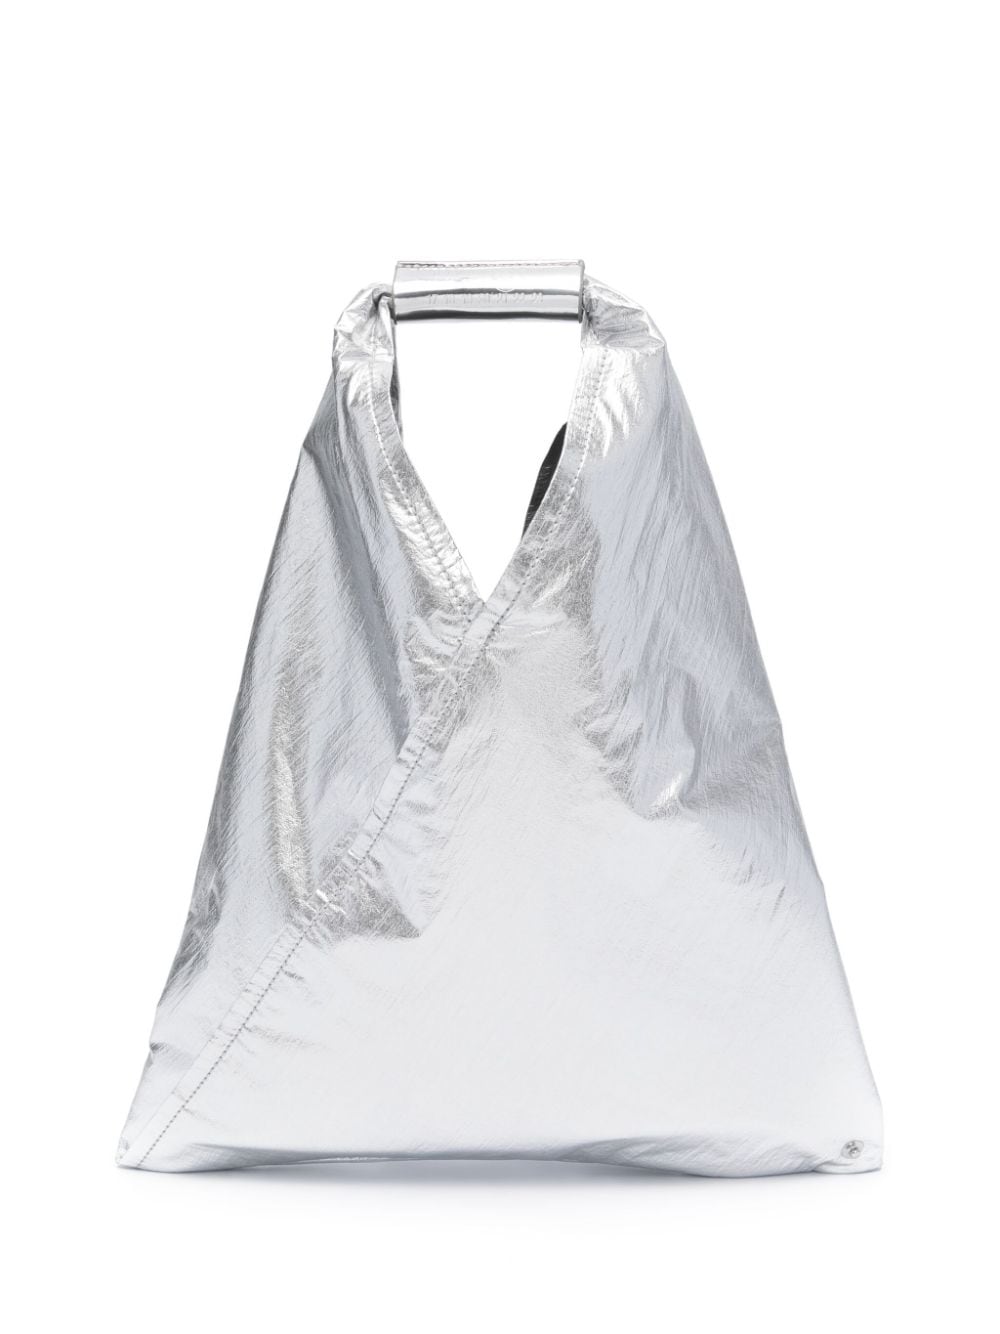 MM6 Maison Margiela Japanese metallic tote bag - Silver von MM6 Maison Margiela